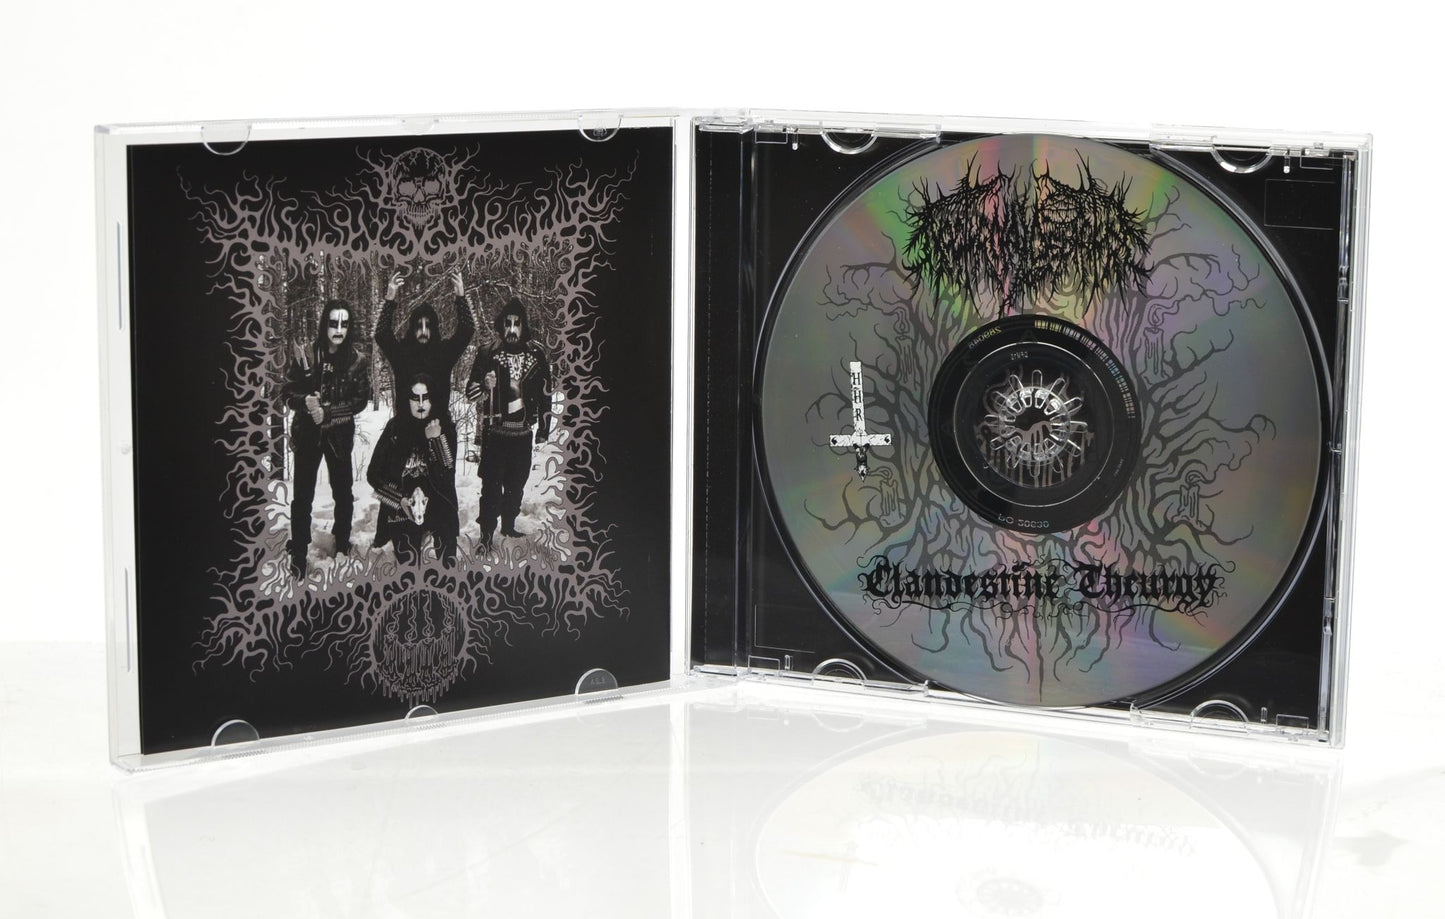 Nocturnal Departue - Clandestine Theurgy (CD) - Black Metal aus Kanada